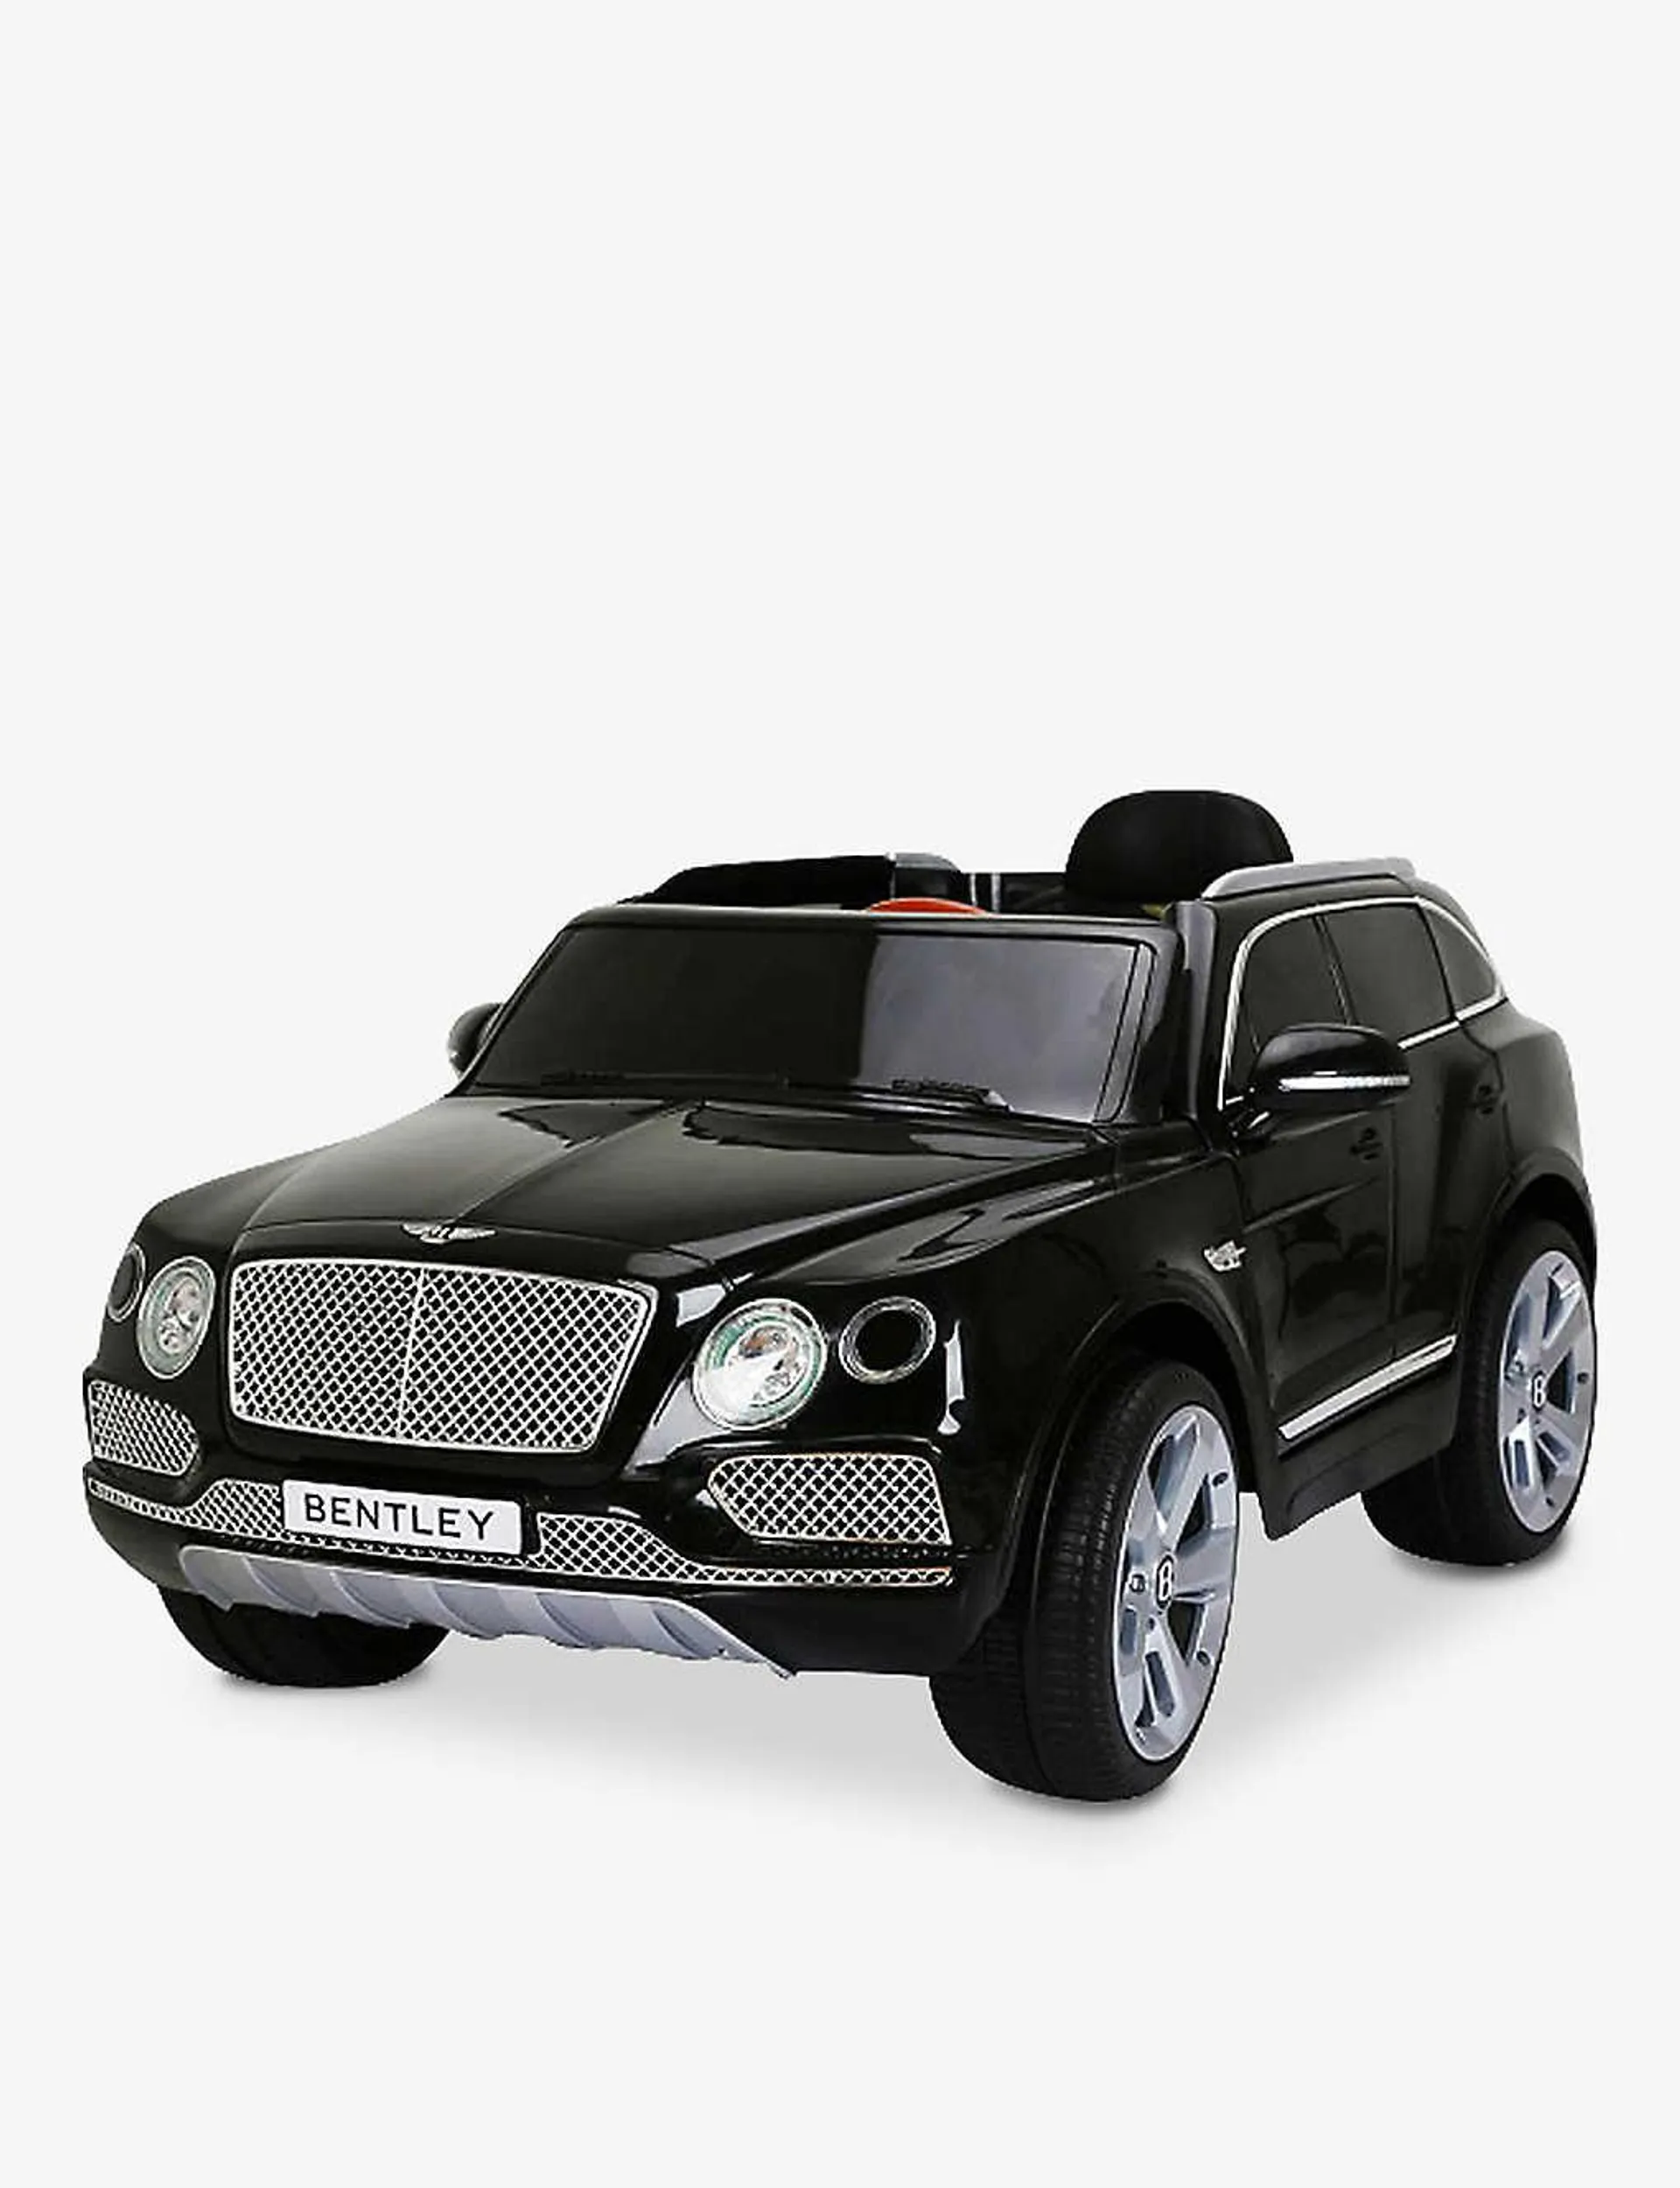 Bentley Bentayga ride-on toy car